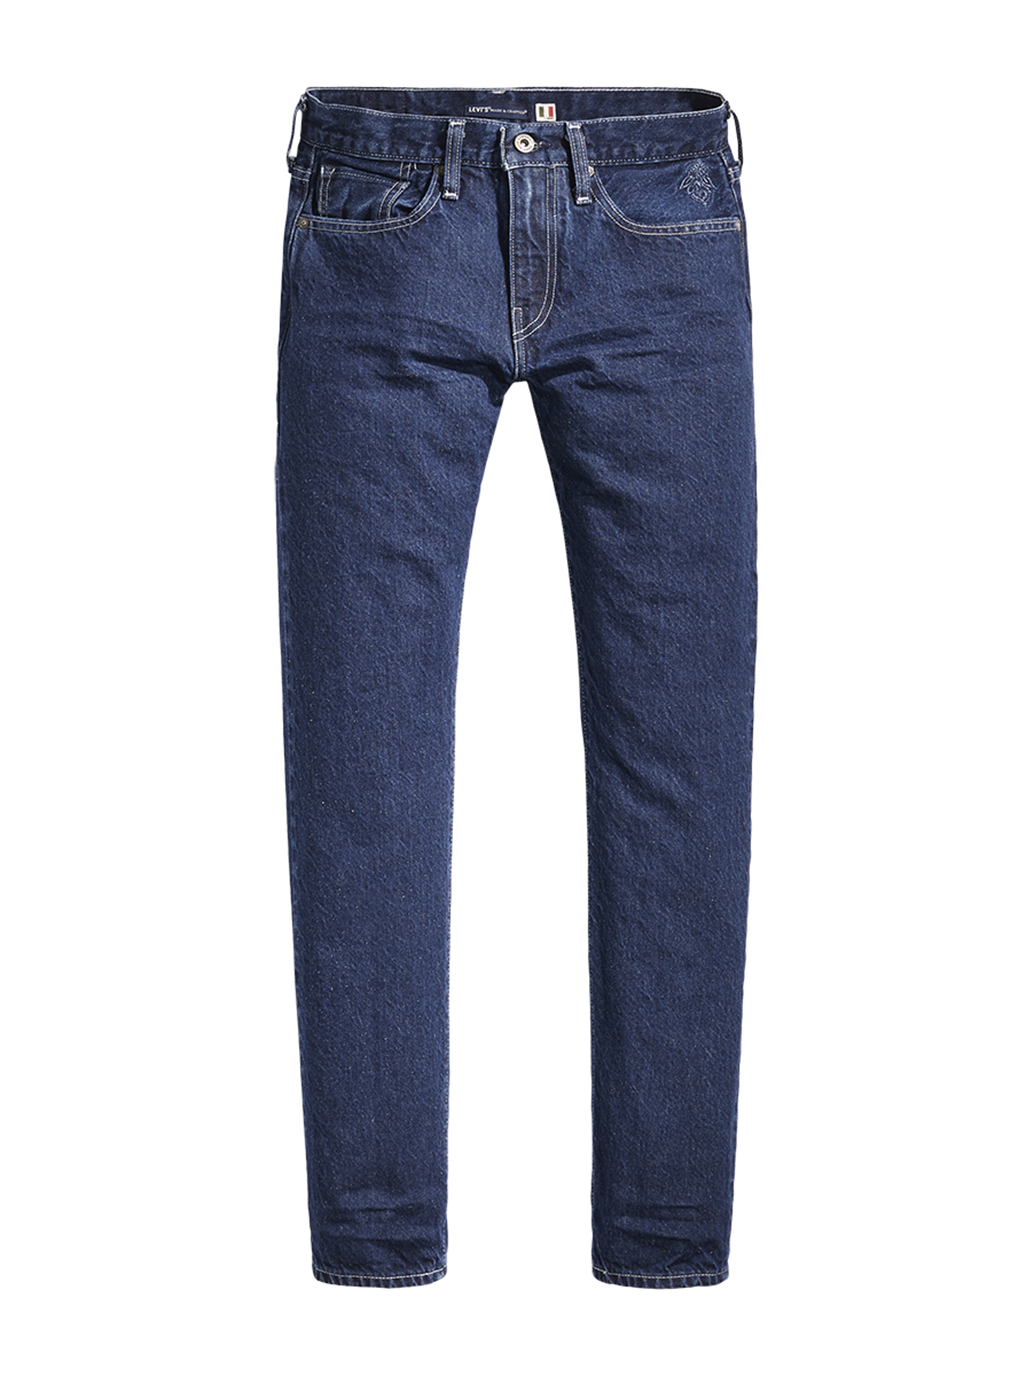 502 taper fit jeans